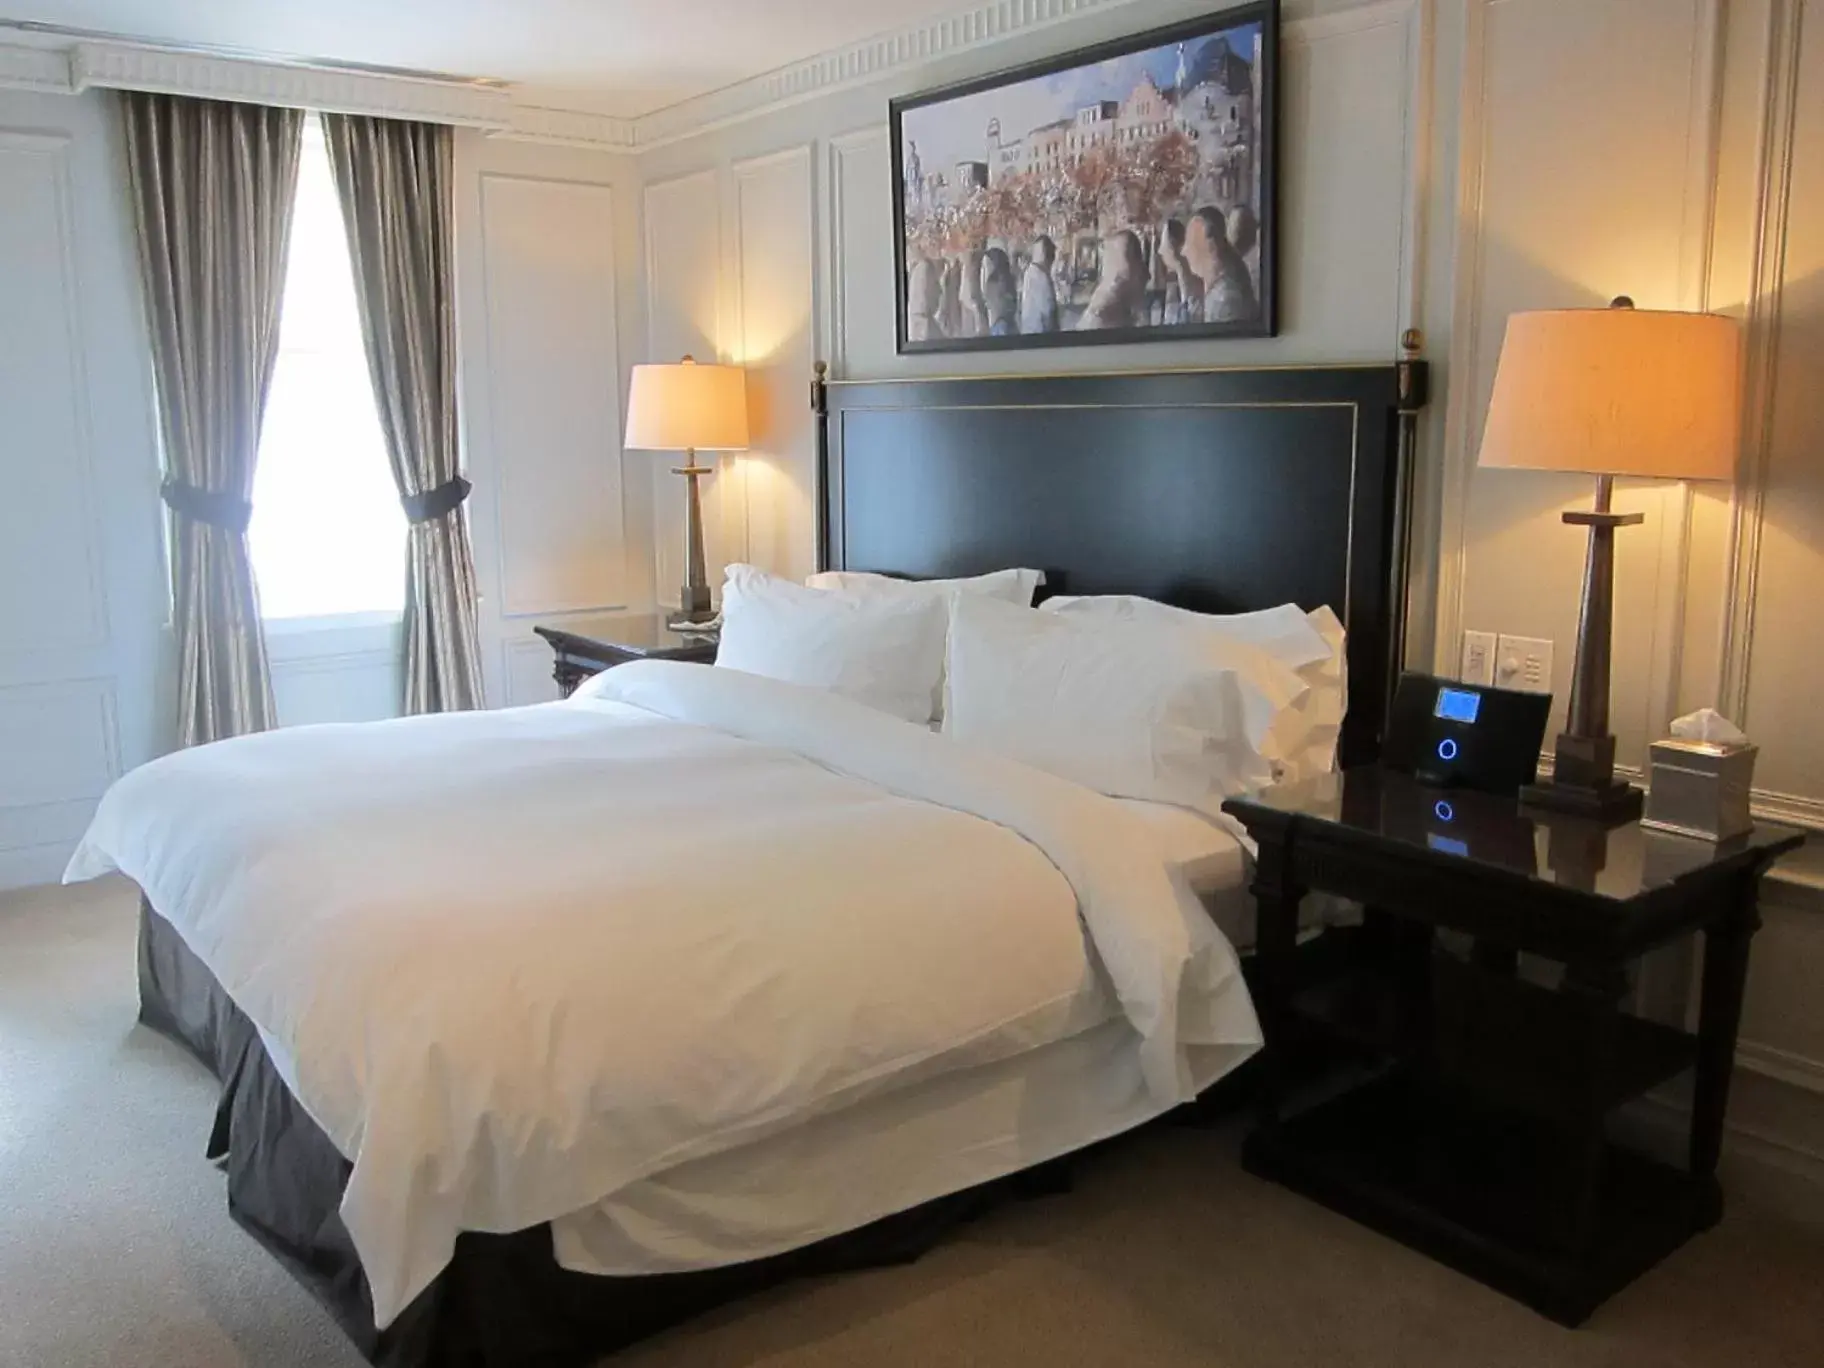 Sultan One-Bedroom Suite in Windsor Arms Hotel